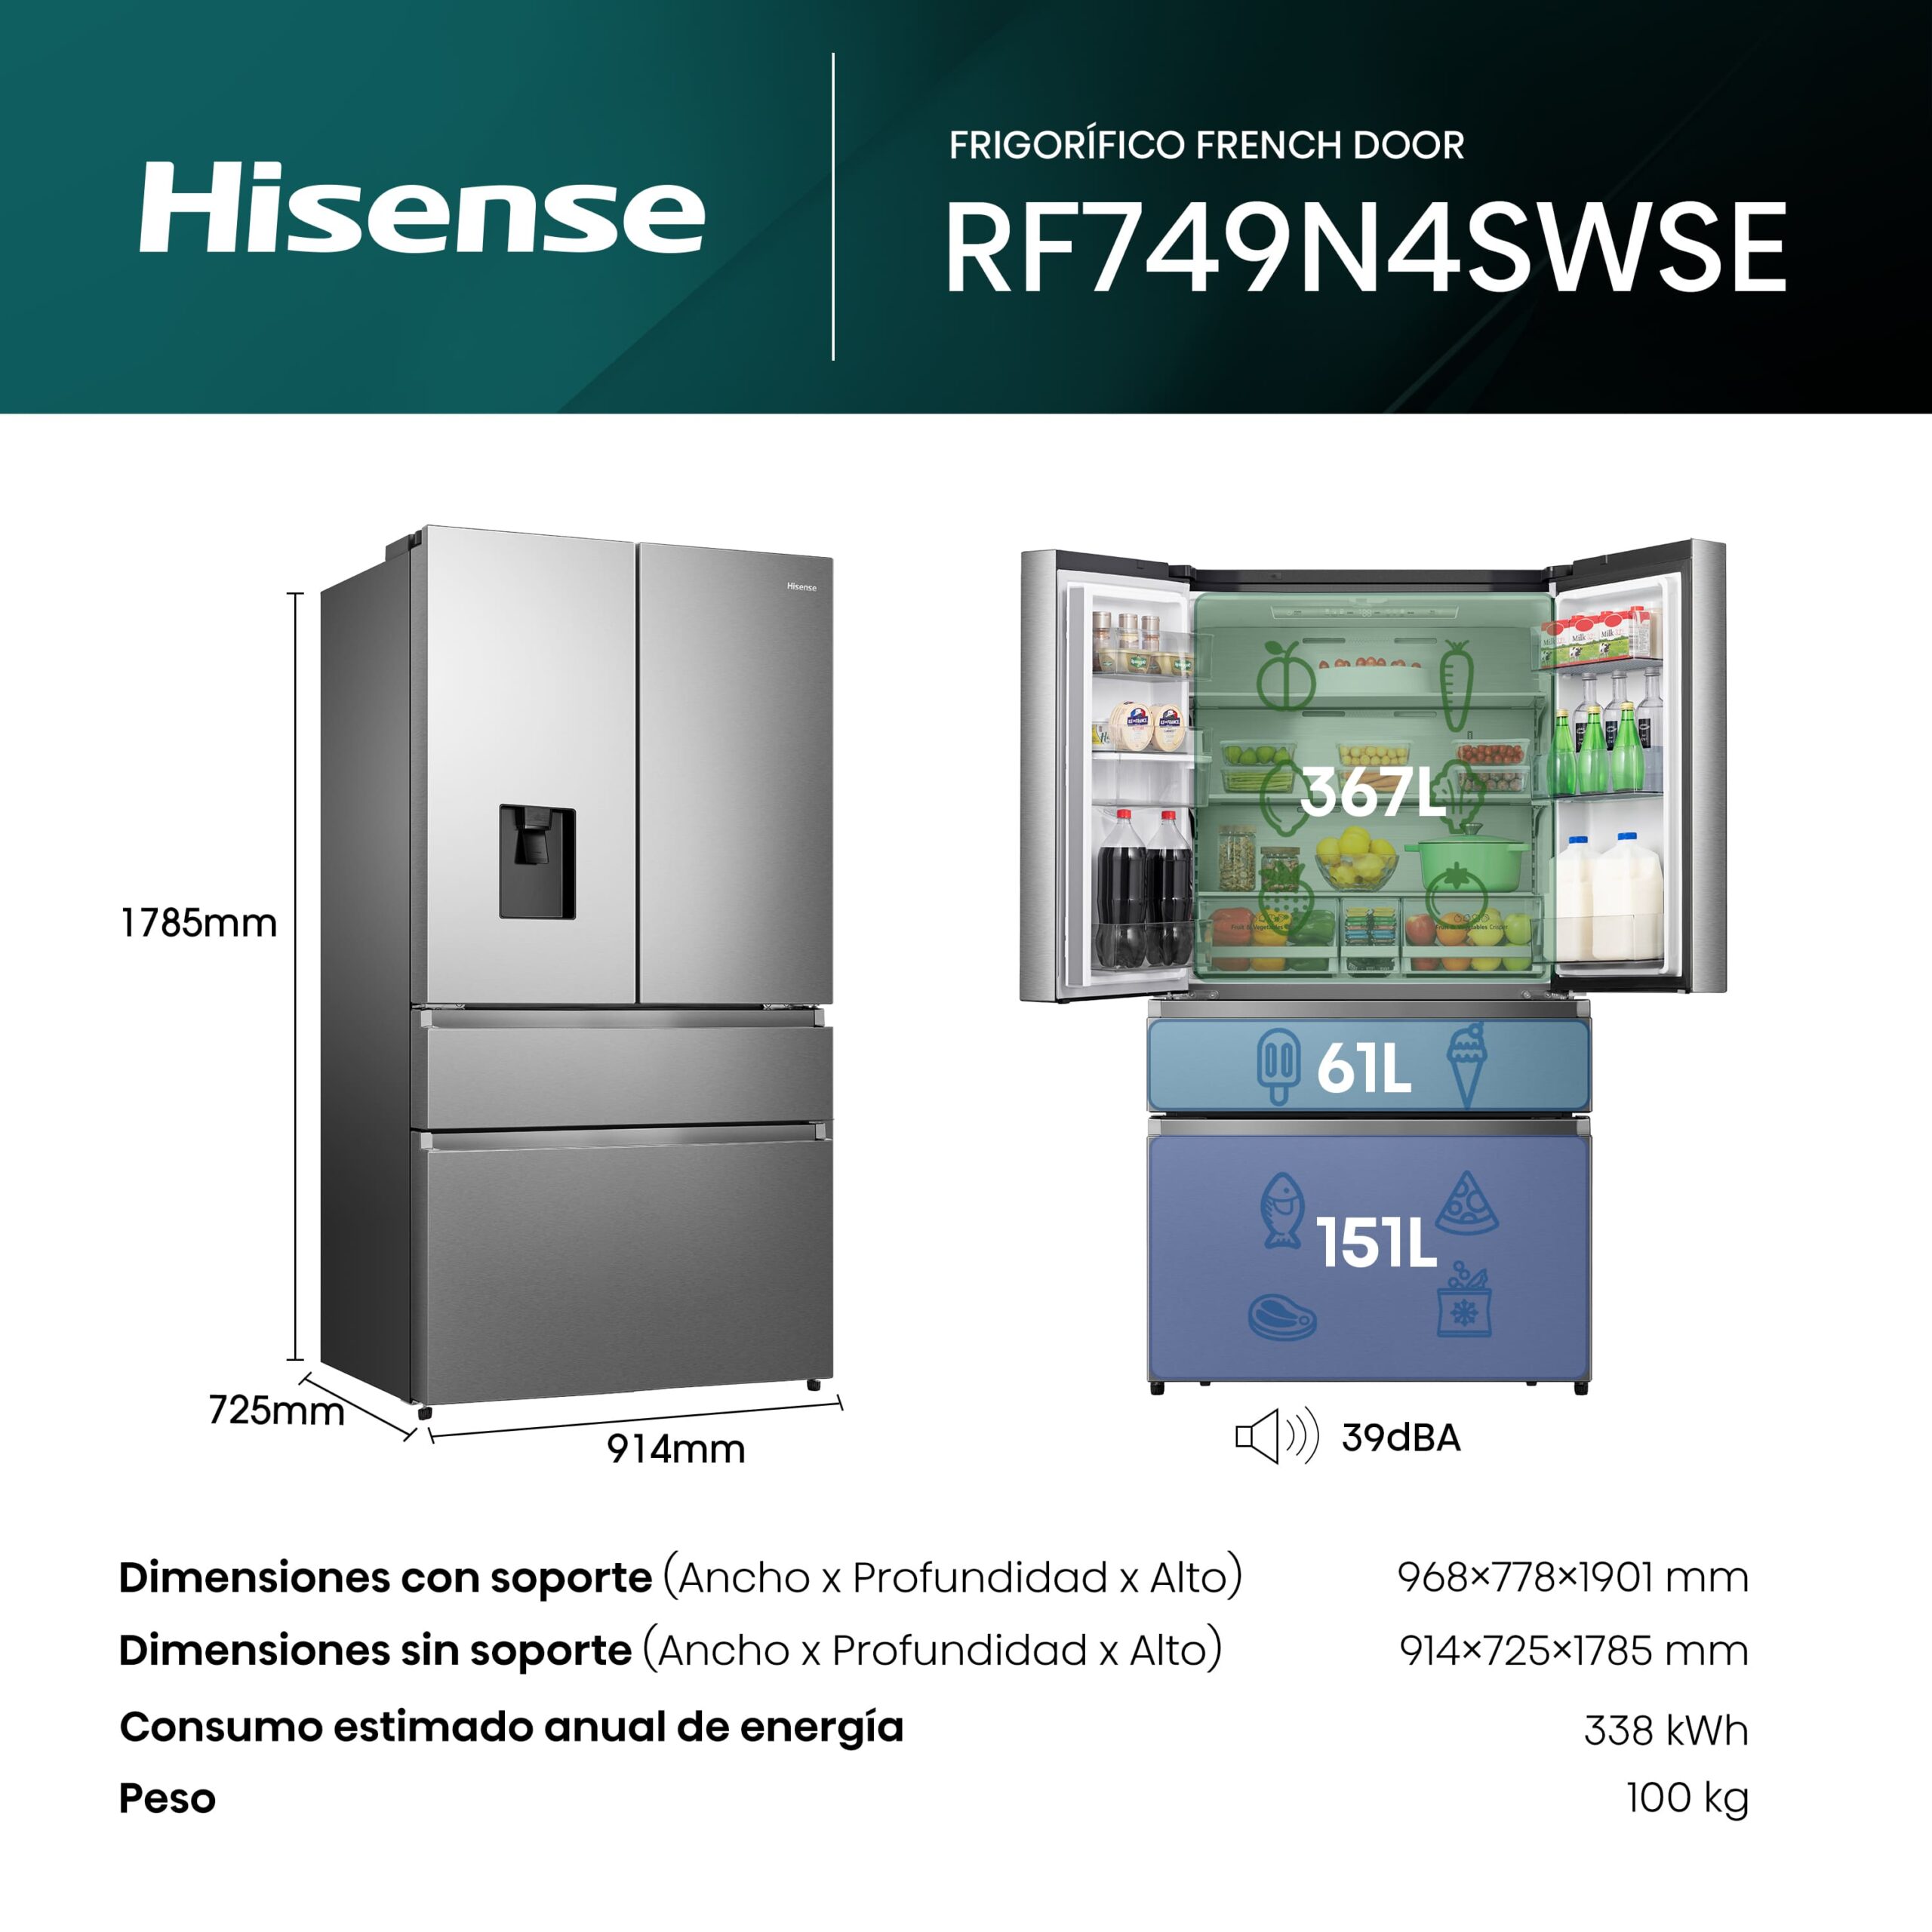 Hisense - RF749N4SWSE – Frigorífico Americano Cajón Frances, Clase E, 579L, Inox